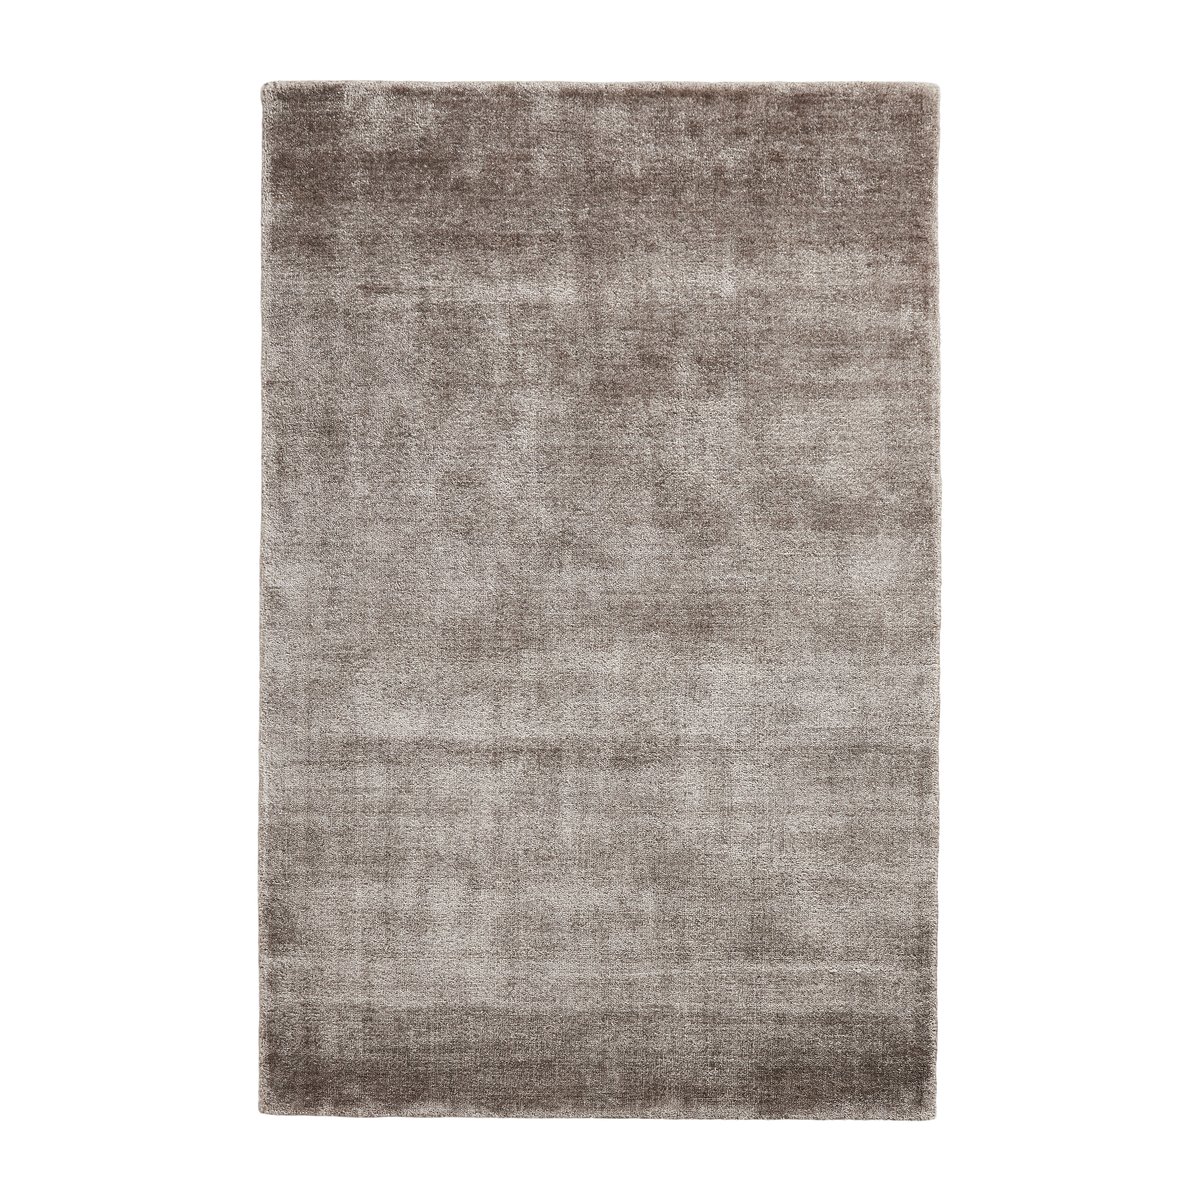 Woud Tint matto 170×240 cm